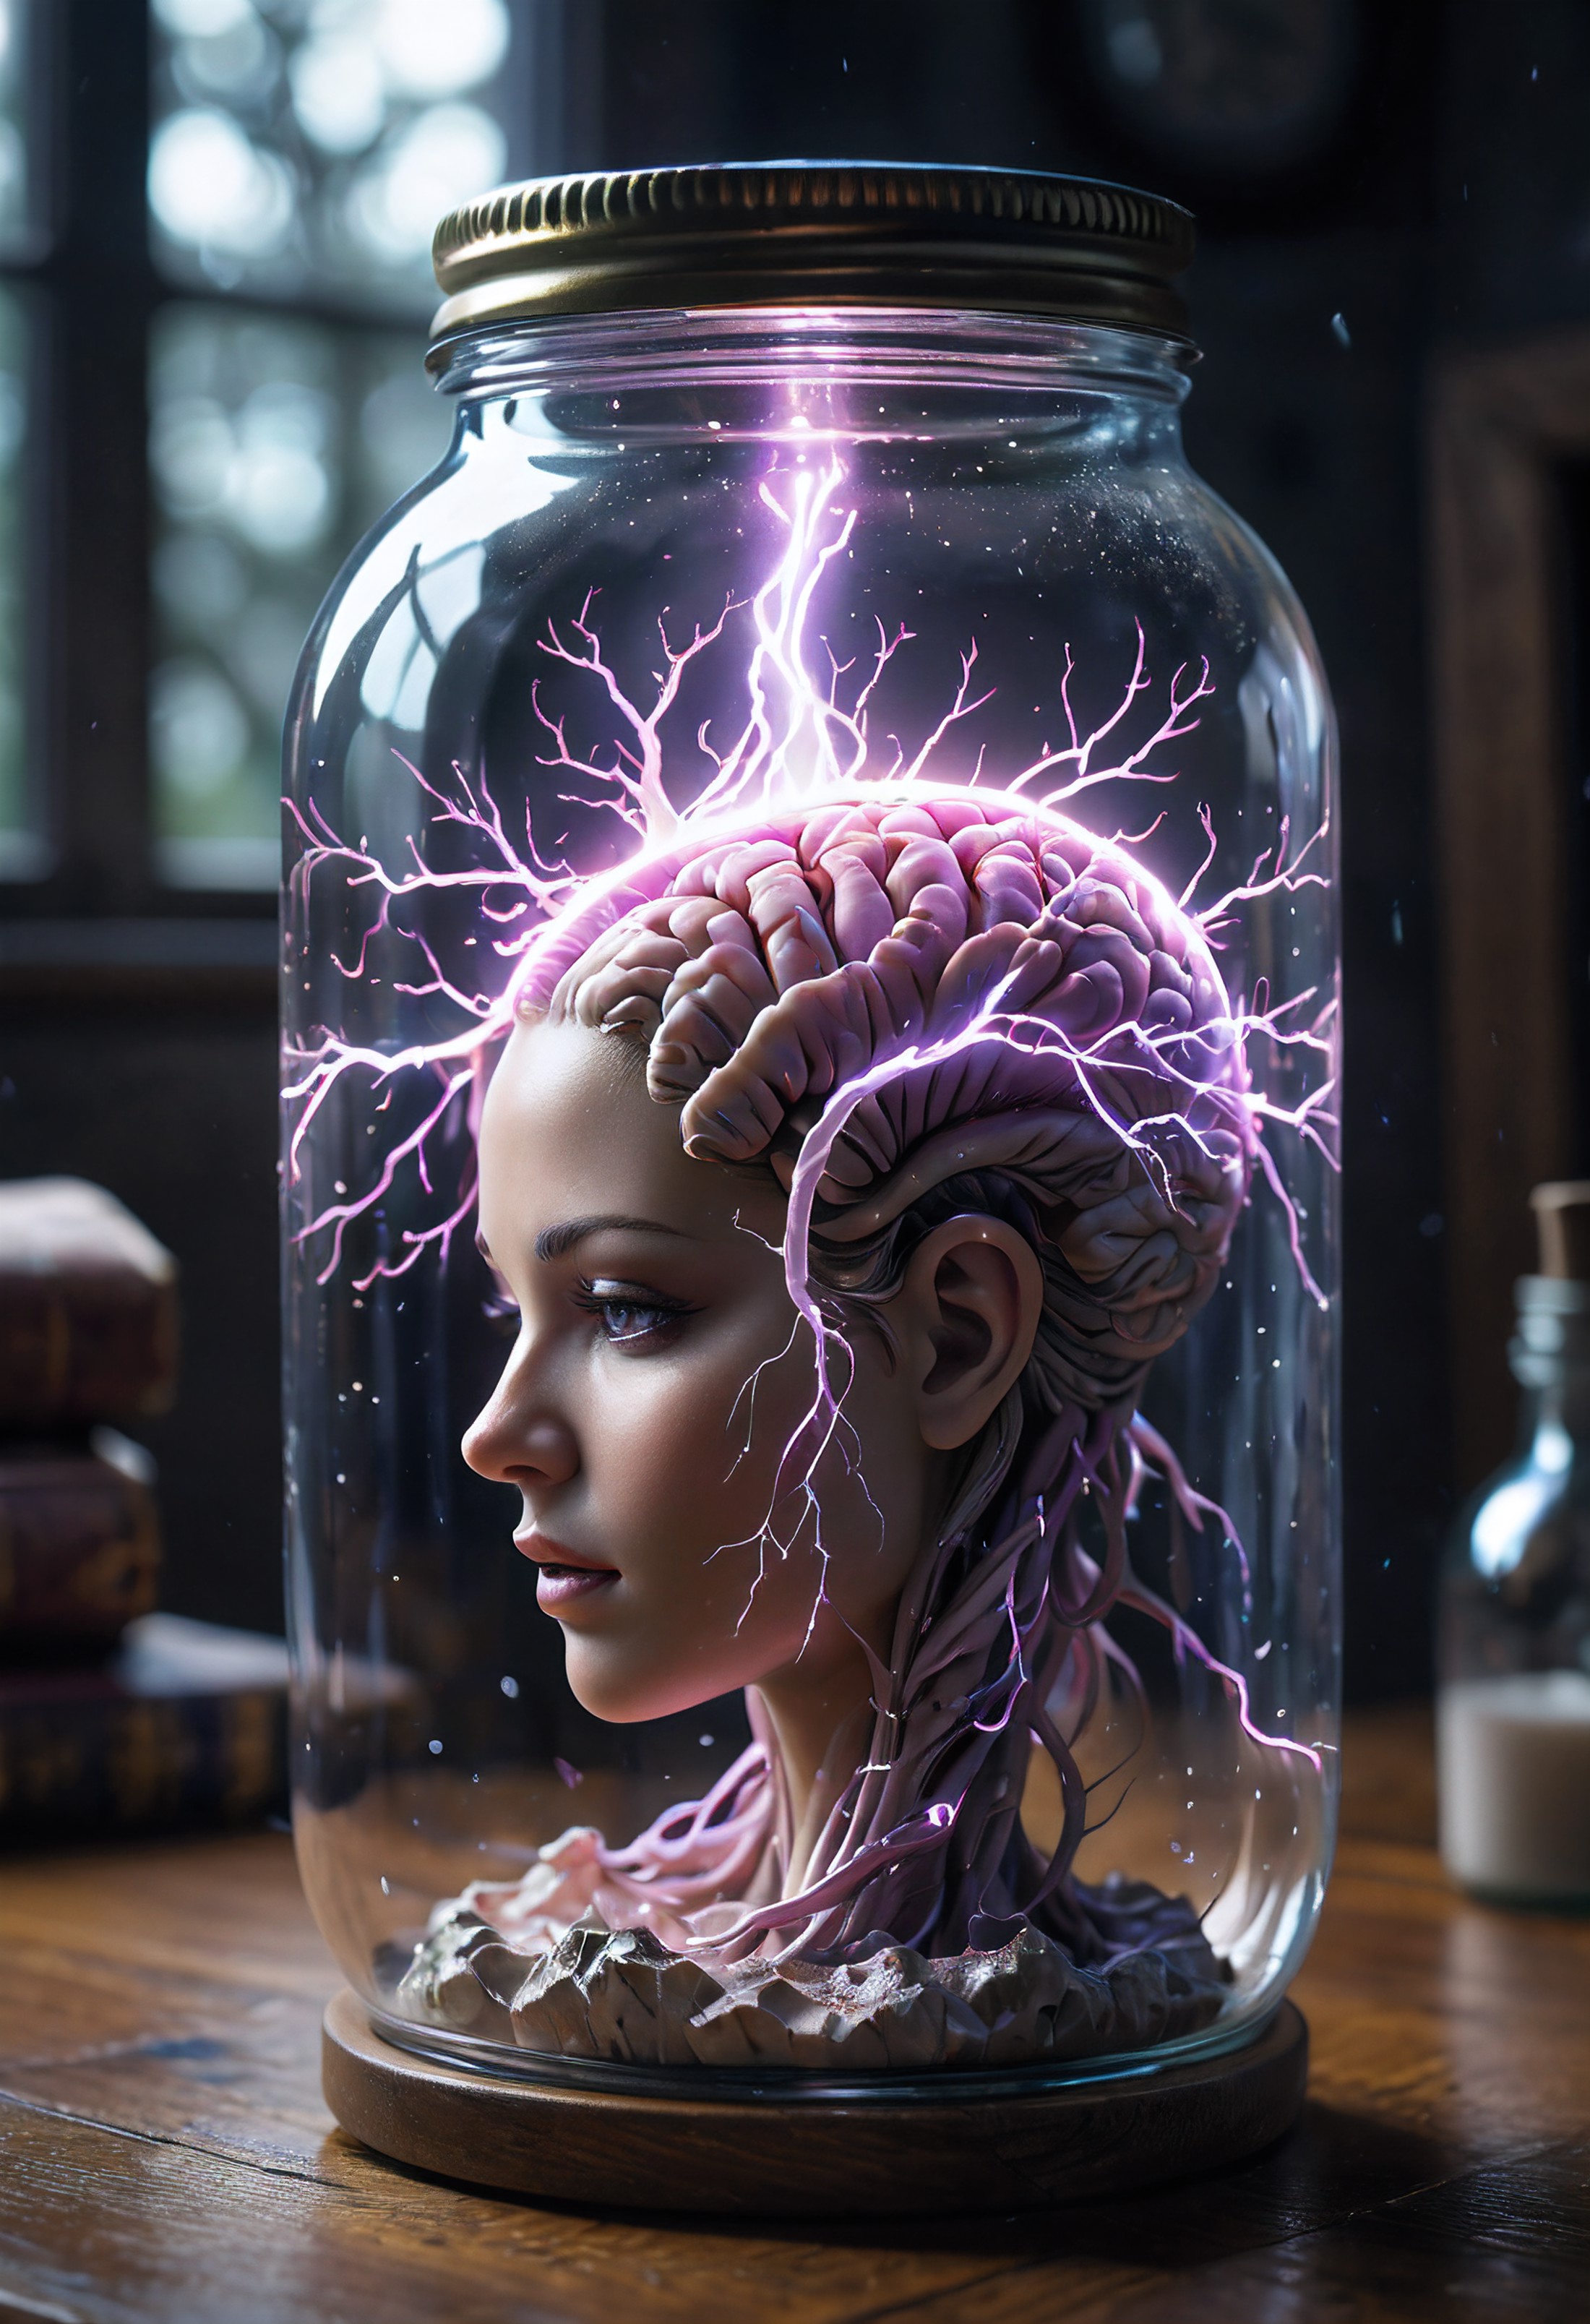 sci-fi style (lightning storm), a human brain growing in a glass jar in a workshop, jar full of a dull transluscent liquid...